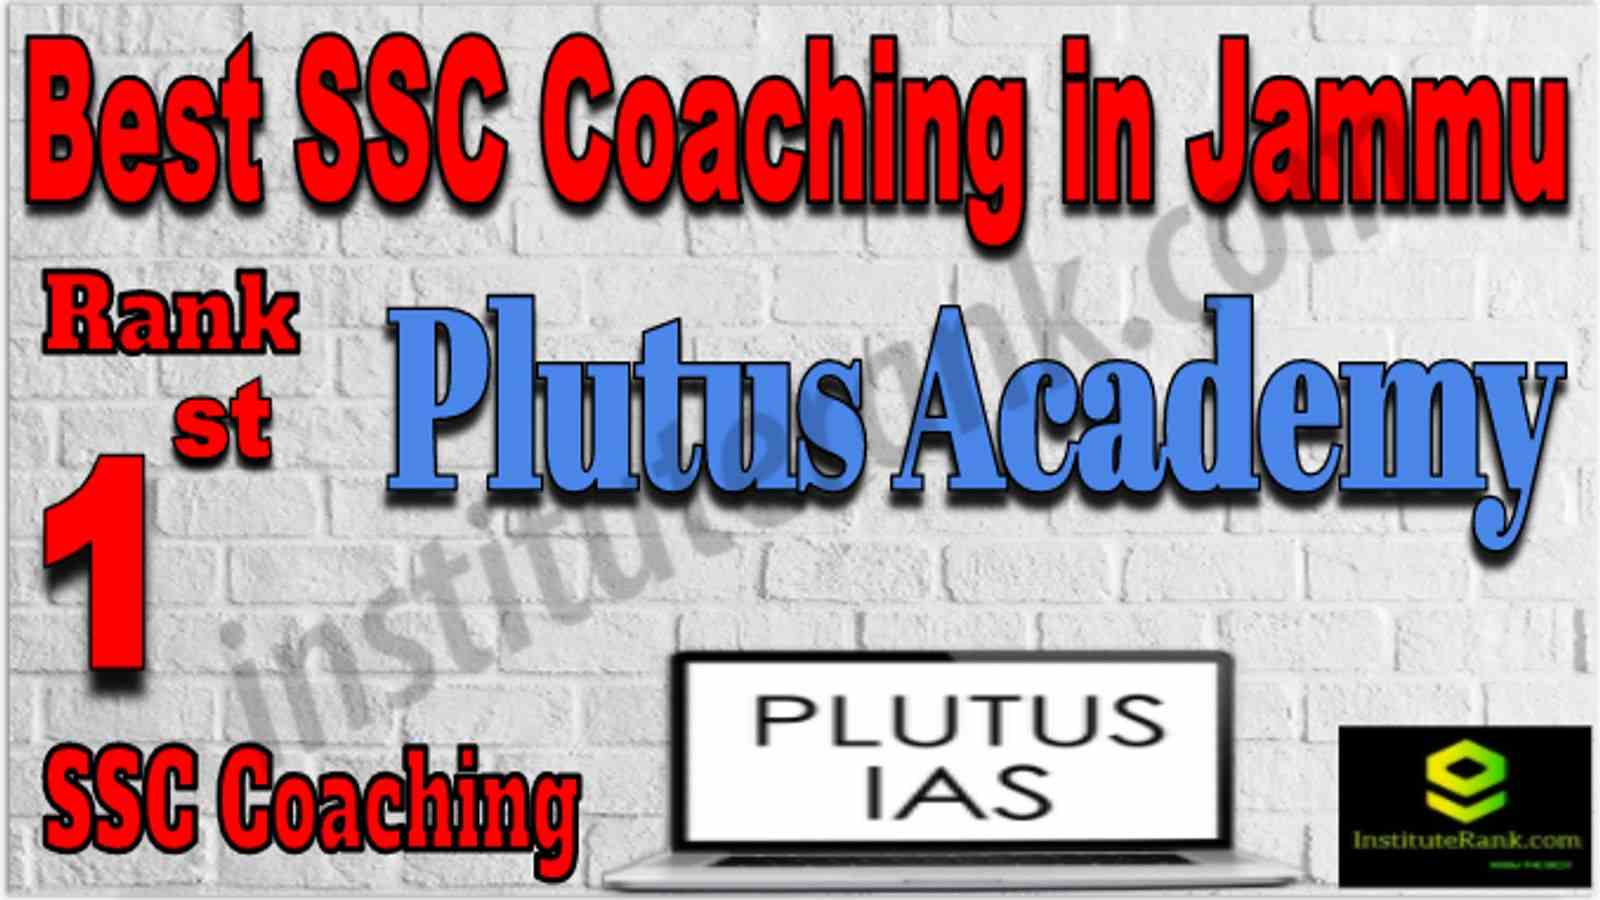 Rank 1 Best SSC Coaching in Jammu